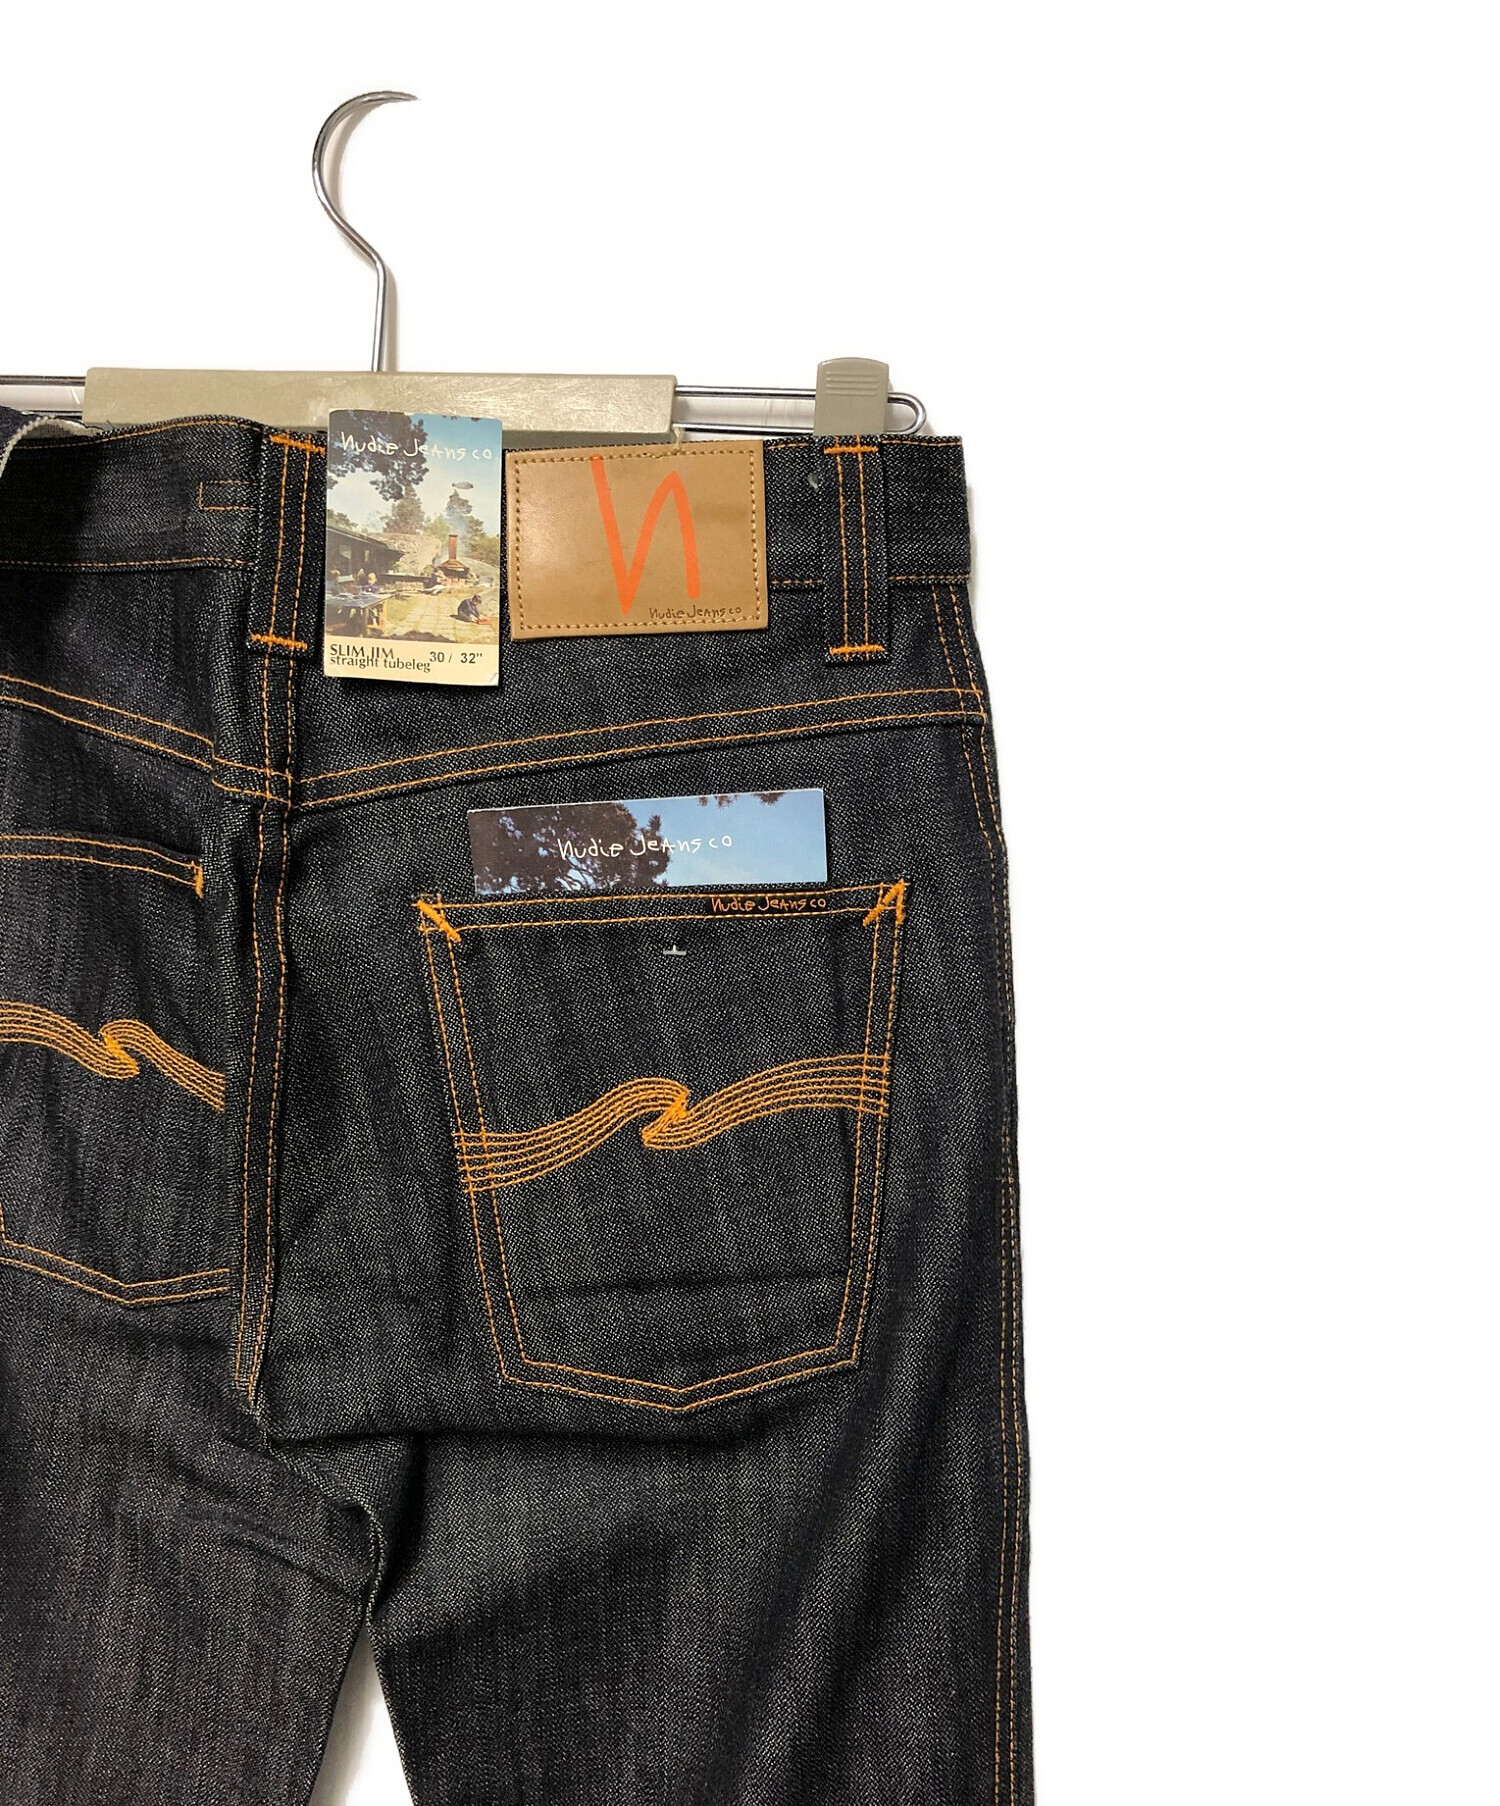 nudie jeans/デニム/新品未使用/サイズ32